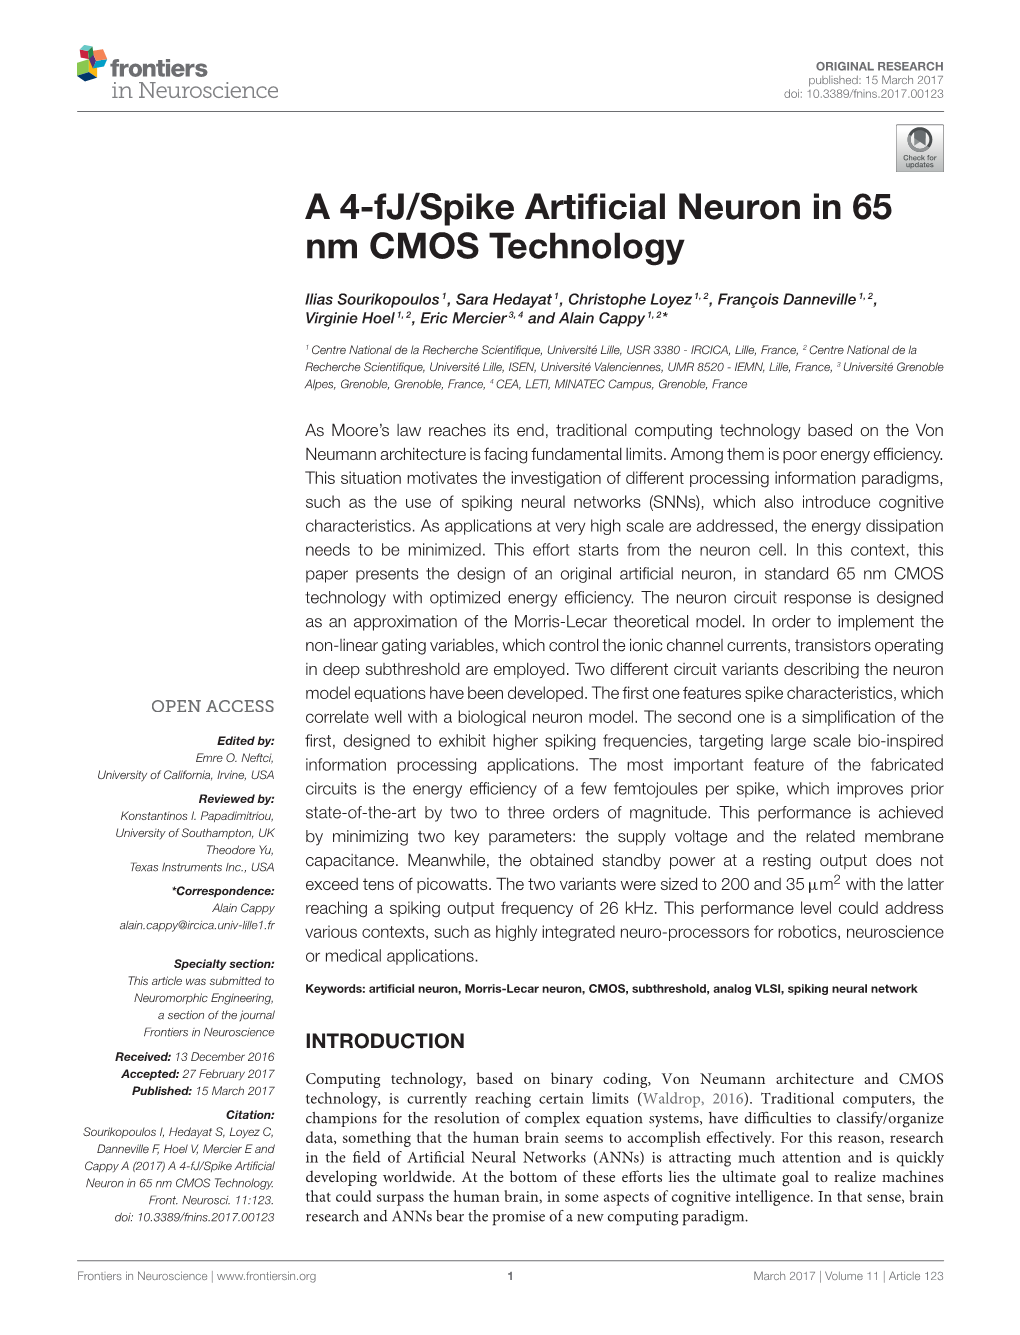 A 4-Fj/Spike Artificial Neuron in 65 Nm CMOS Technology